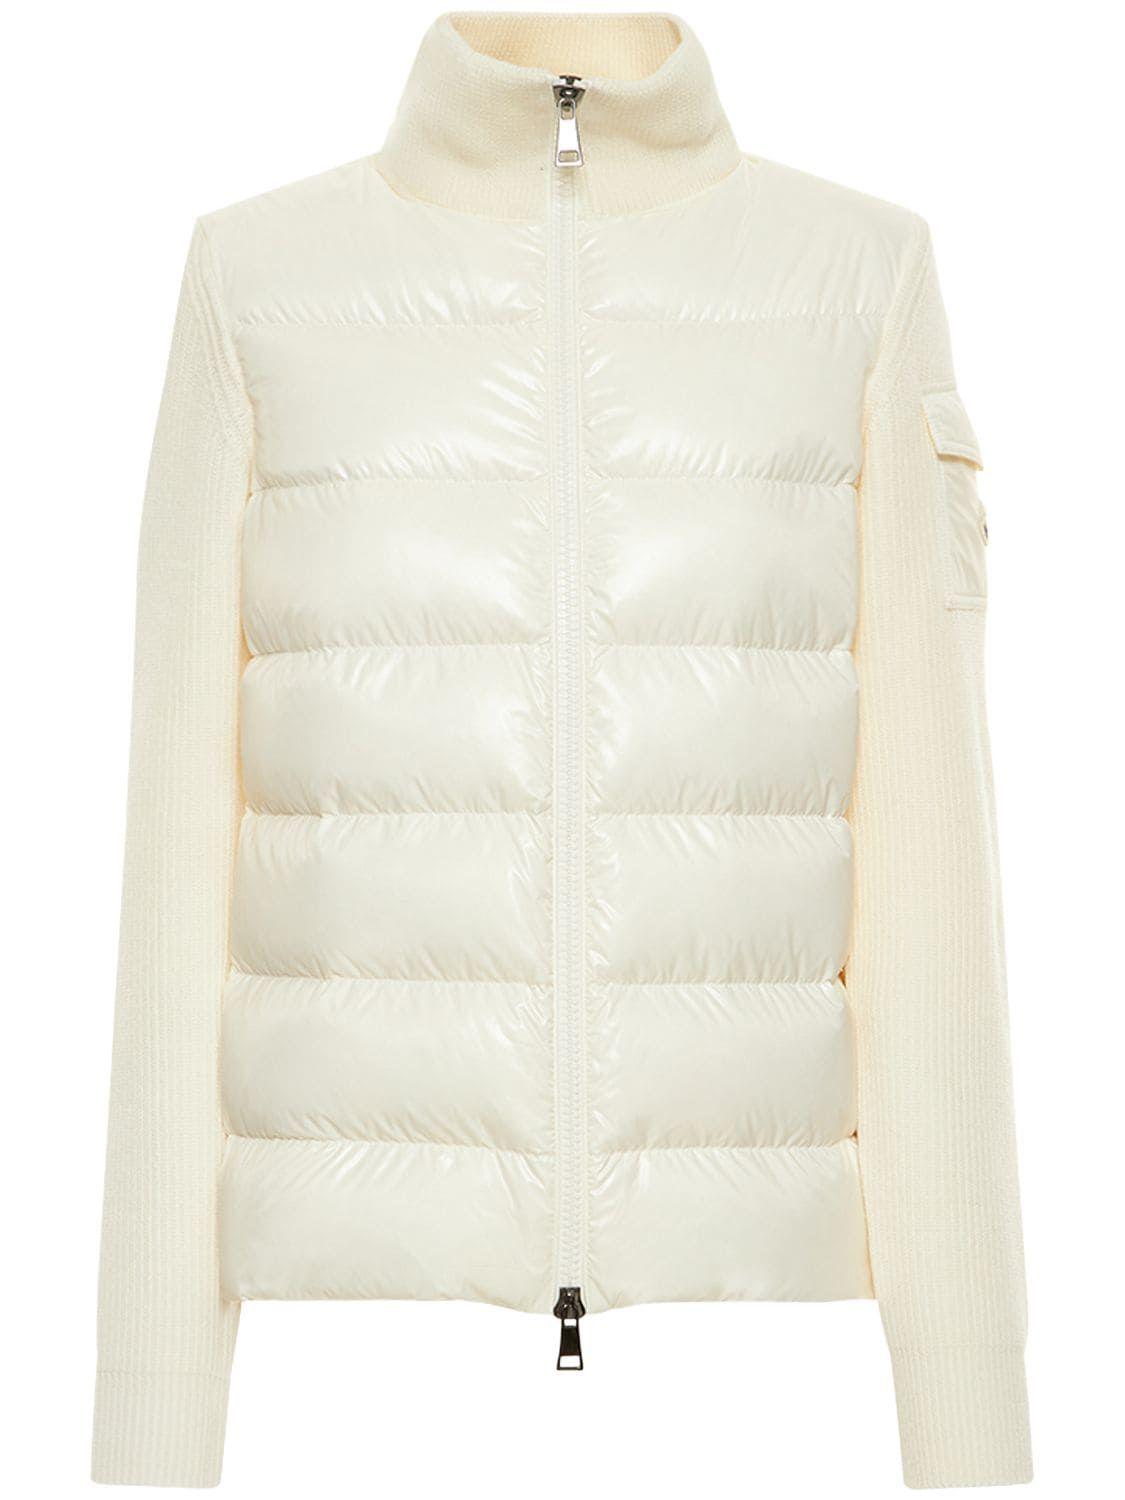 Moncler Wool & Nylon Down Zip Cardigan Jacket in White | Lyst